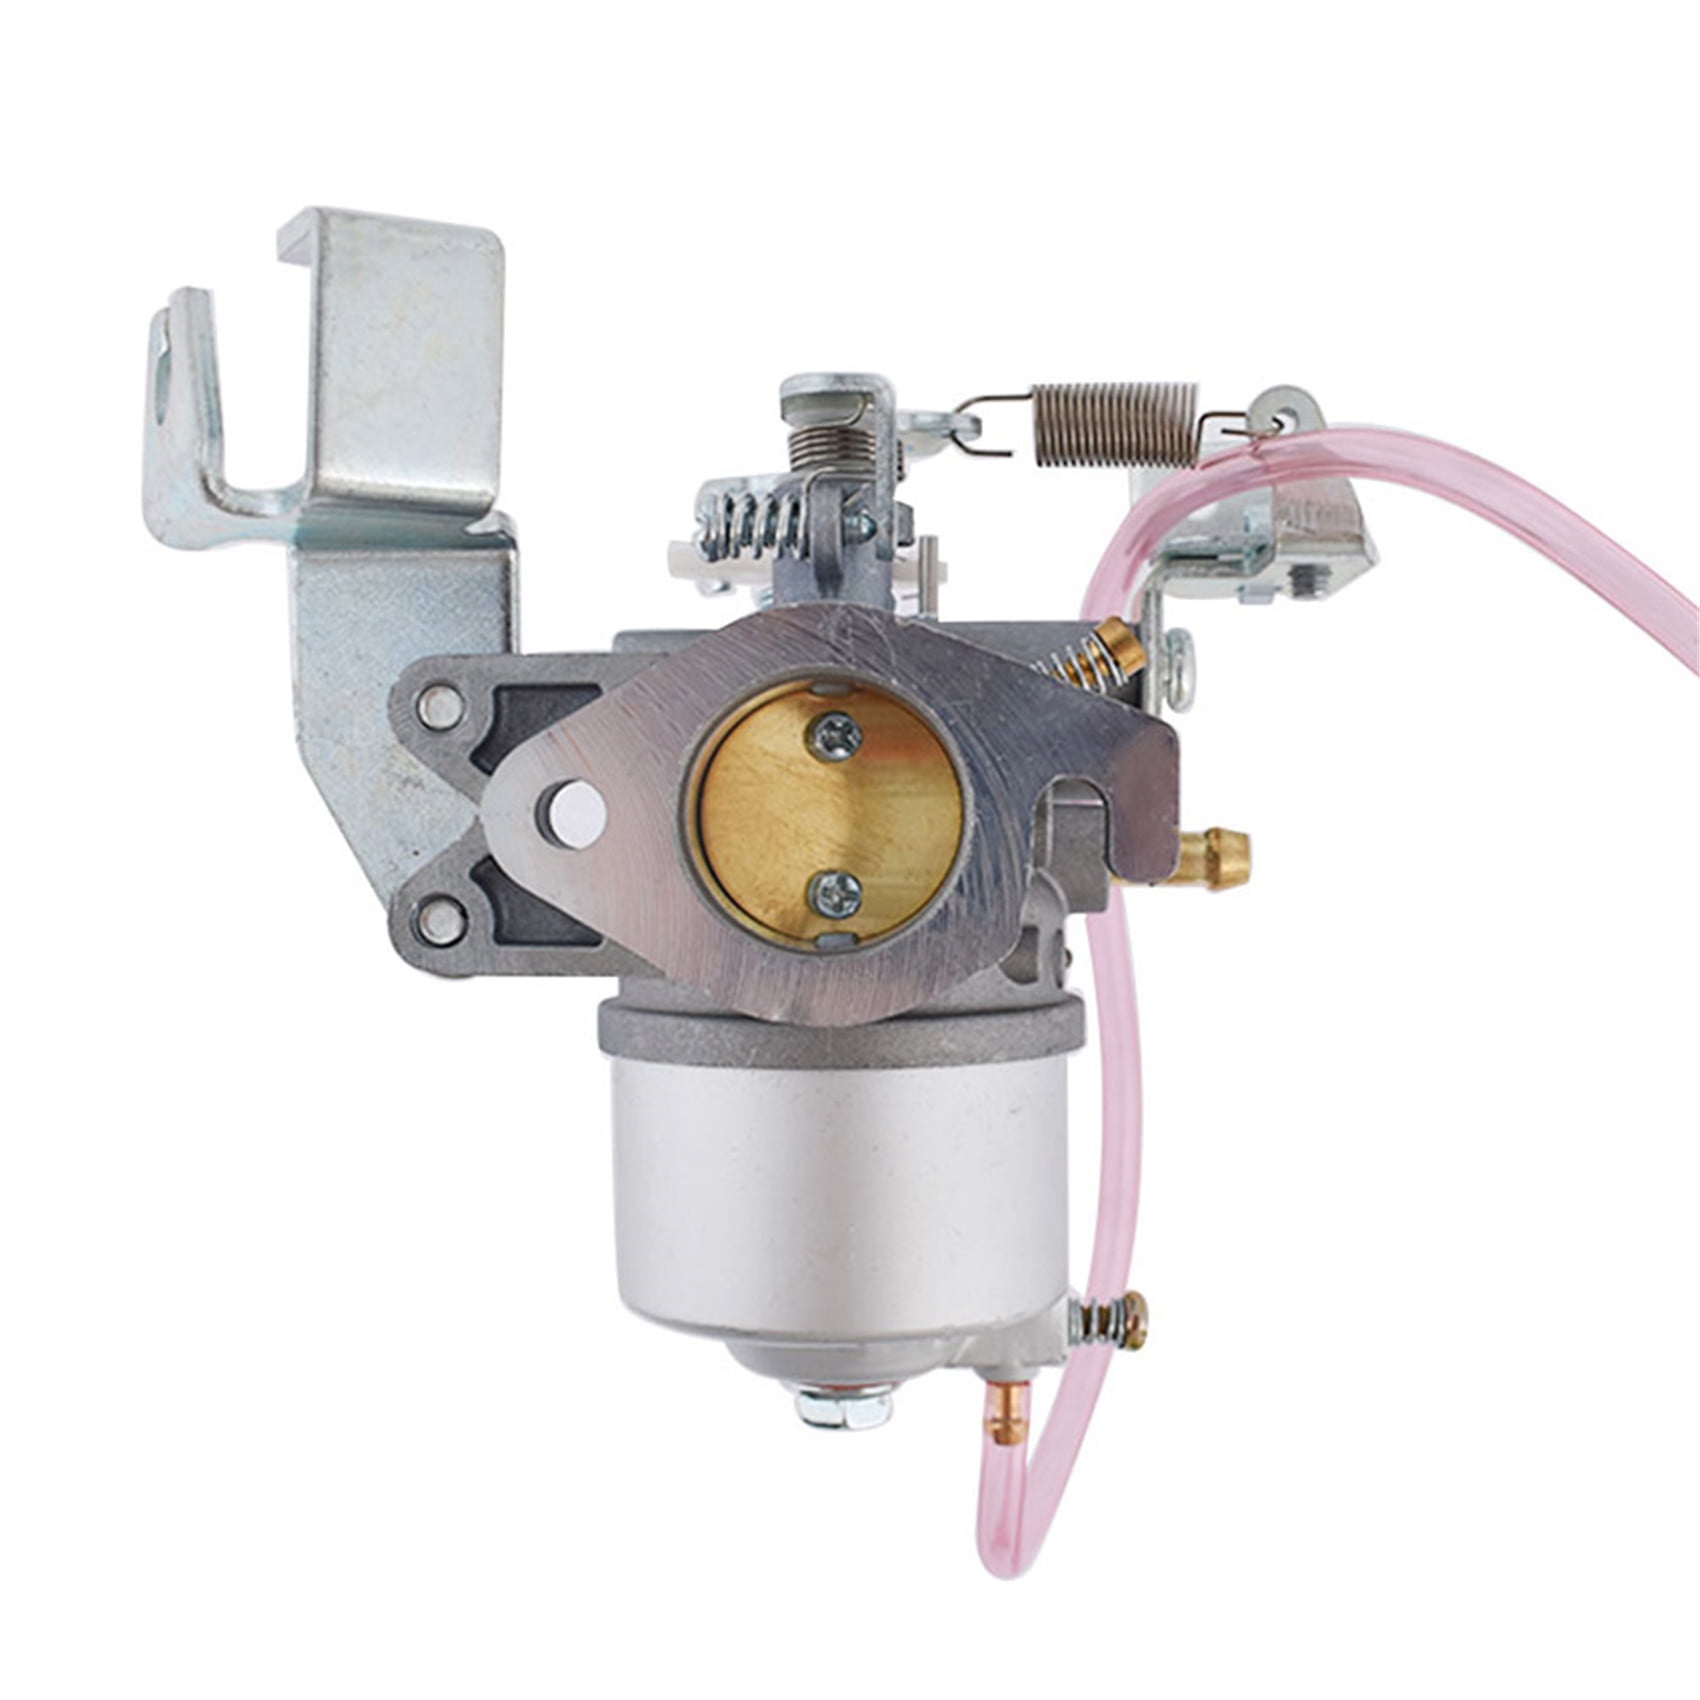 Details about   73197 Carburetor Gasket Fuel Filter Fit For Craftsman 30CC 4-CYCLE Gas Trimmer